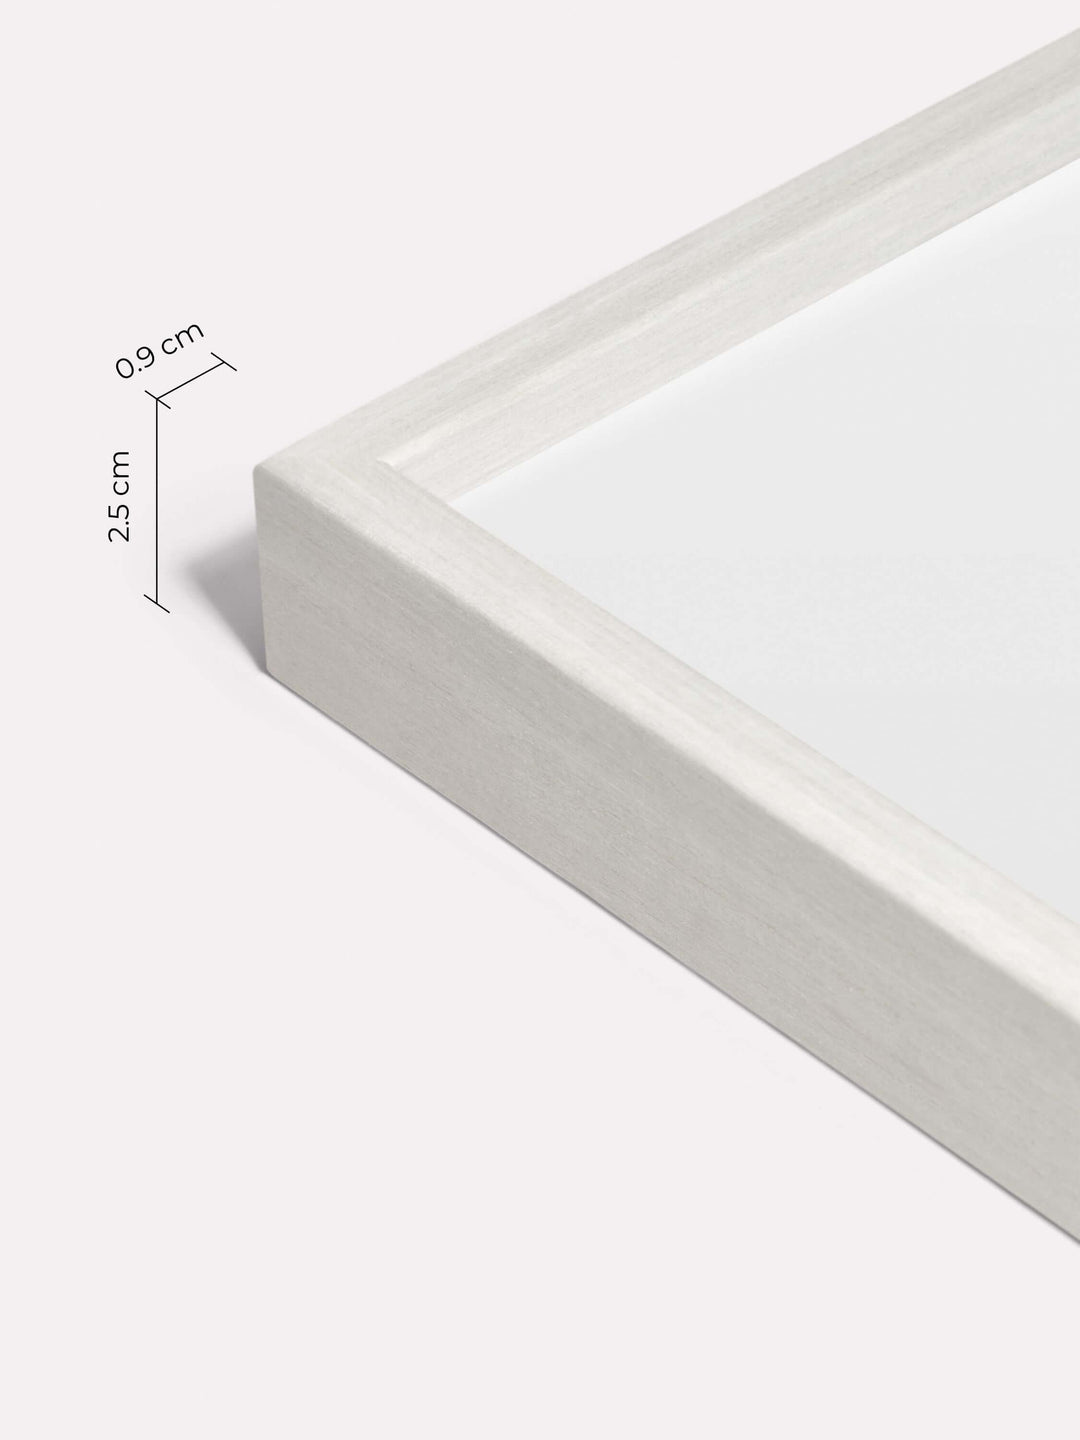 Thin Frame, White, 30x40 cm - Close-up view